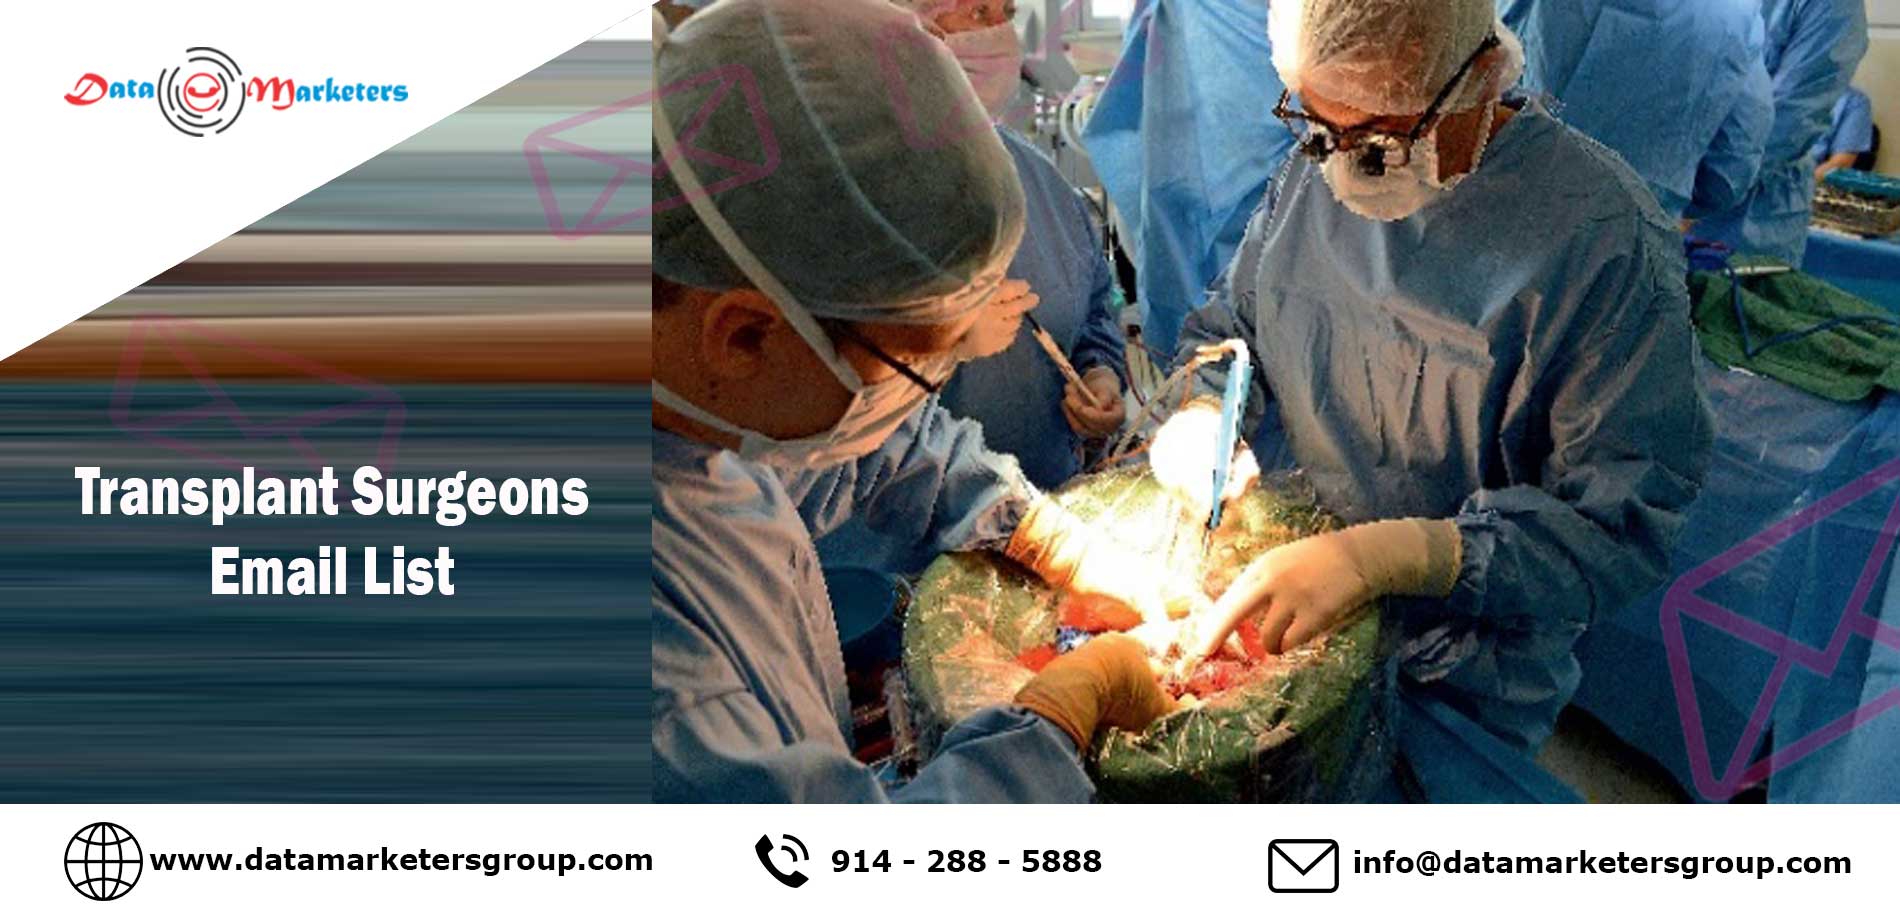 Transplant surgeon job outlook